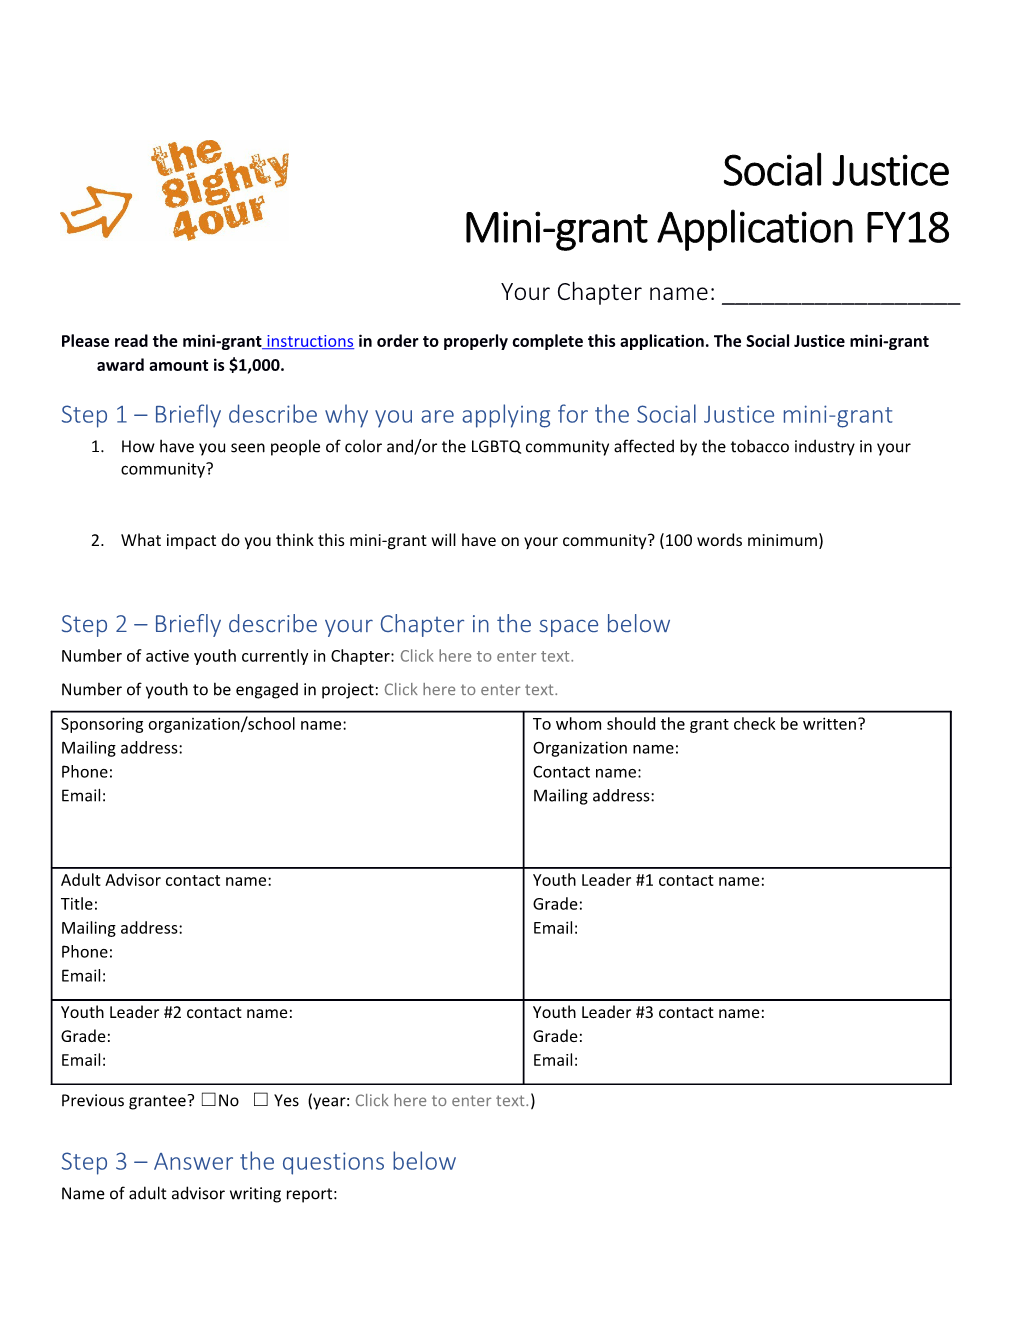 Mini-Grant Application FY18